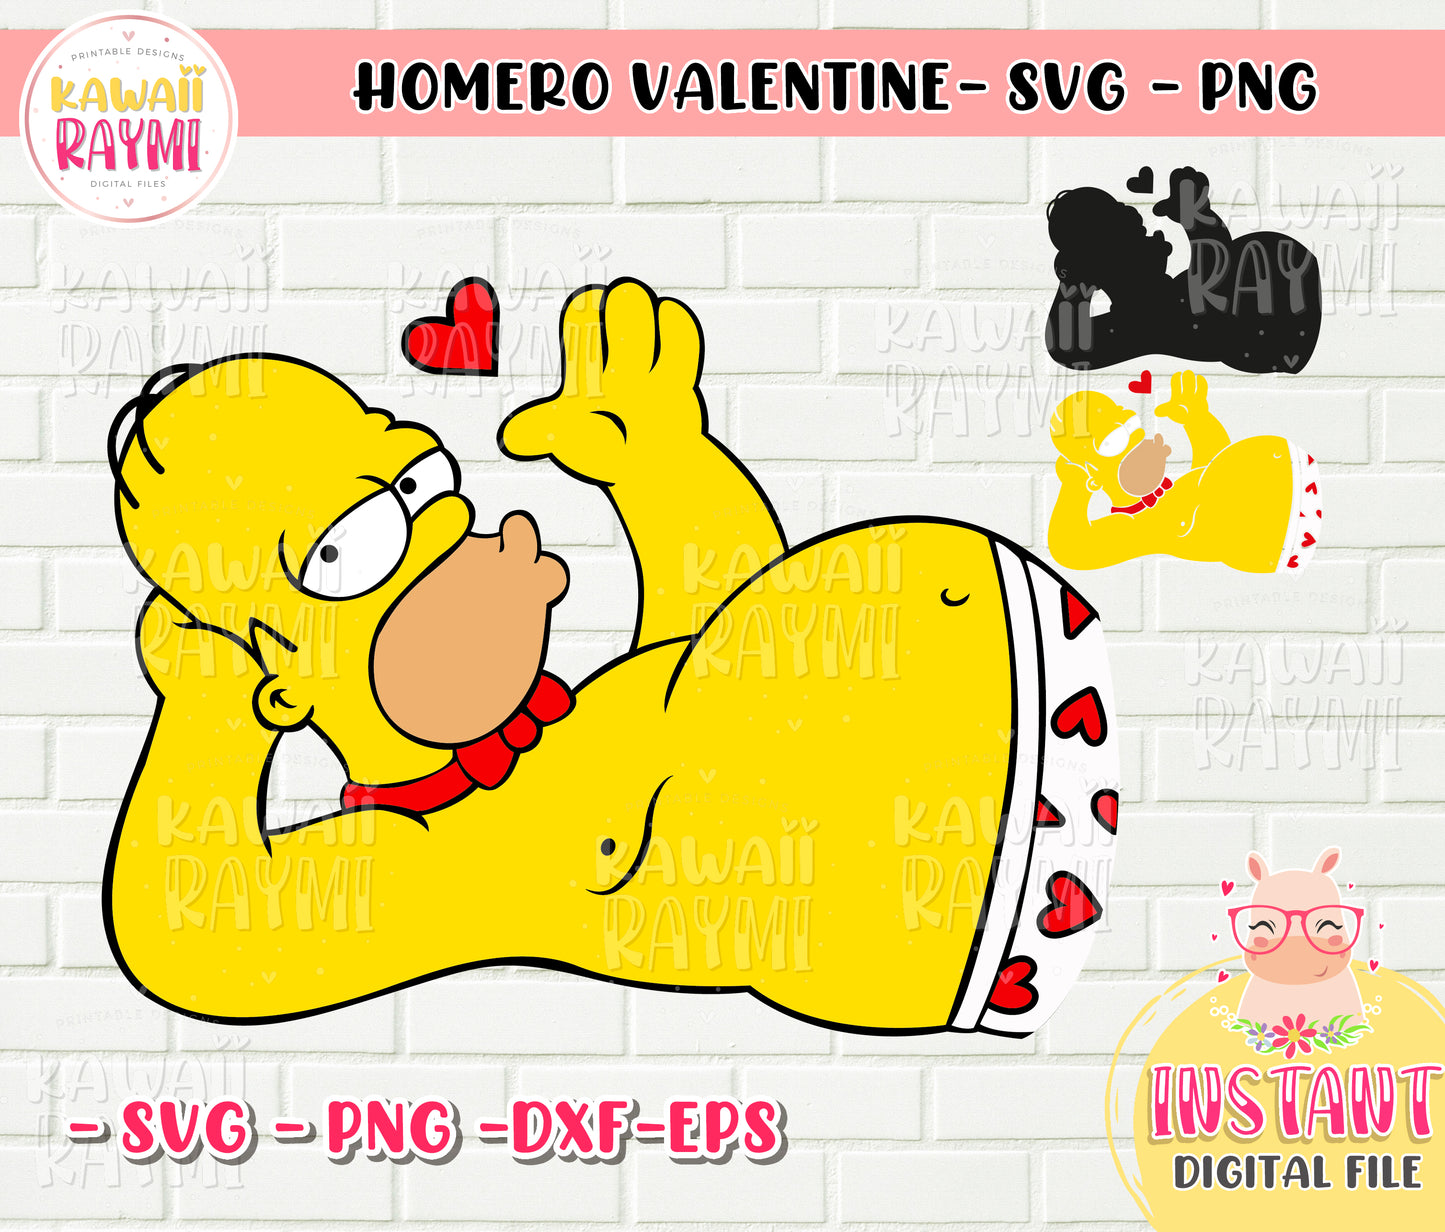 Homero Valentine SVG, cricut cut file, layered, homero, love